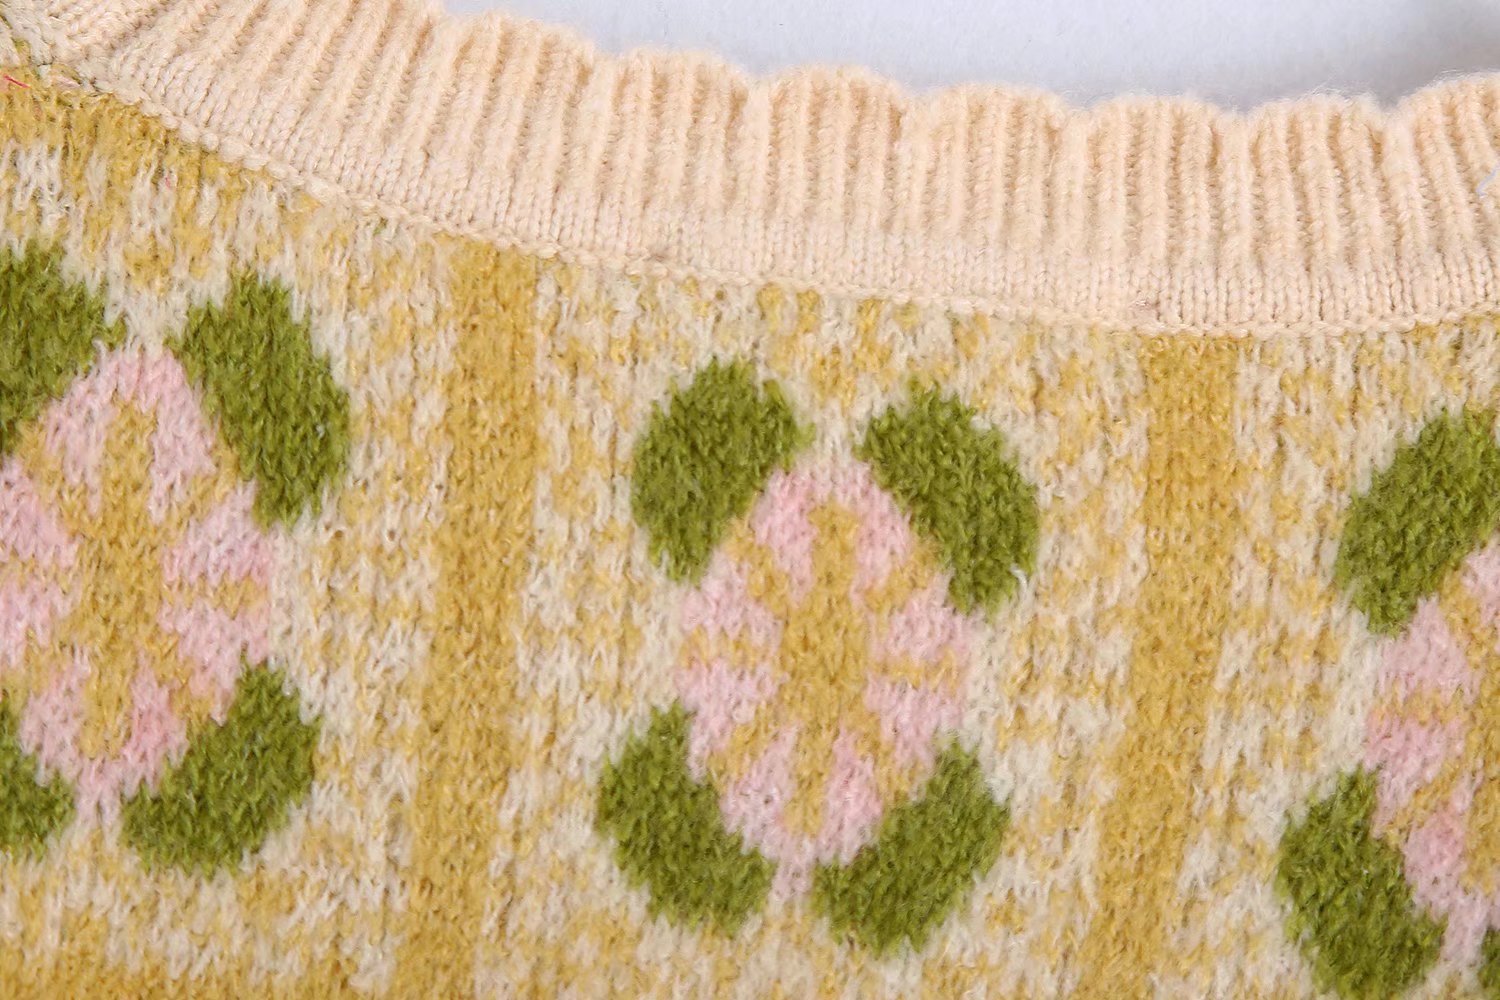 Flower Pattern Jacquard Knitted Crop Cardigan NSXFL116060